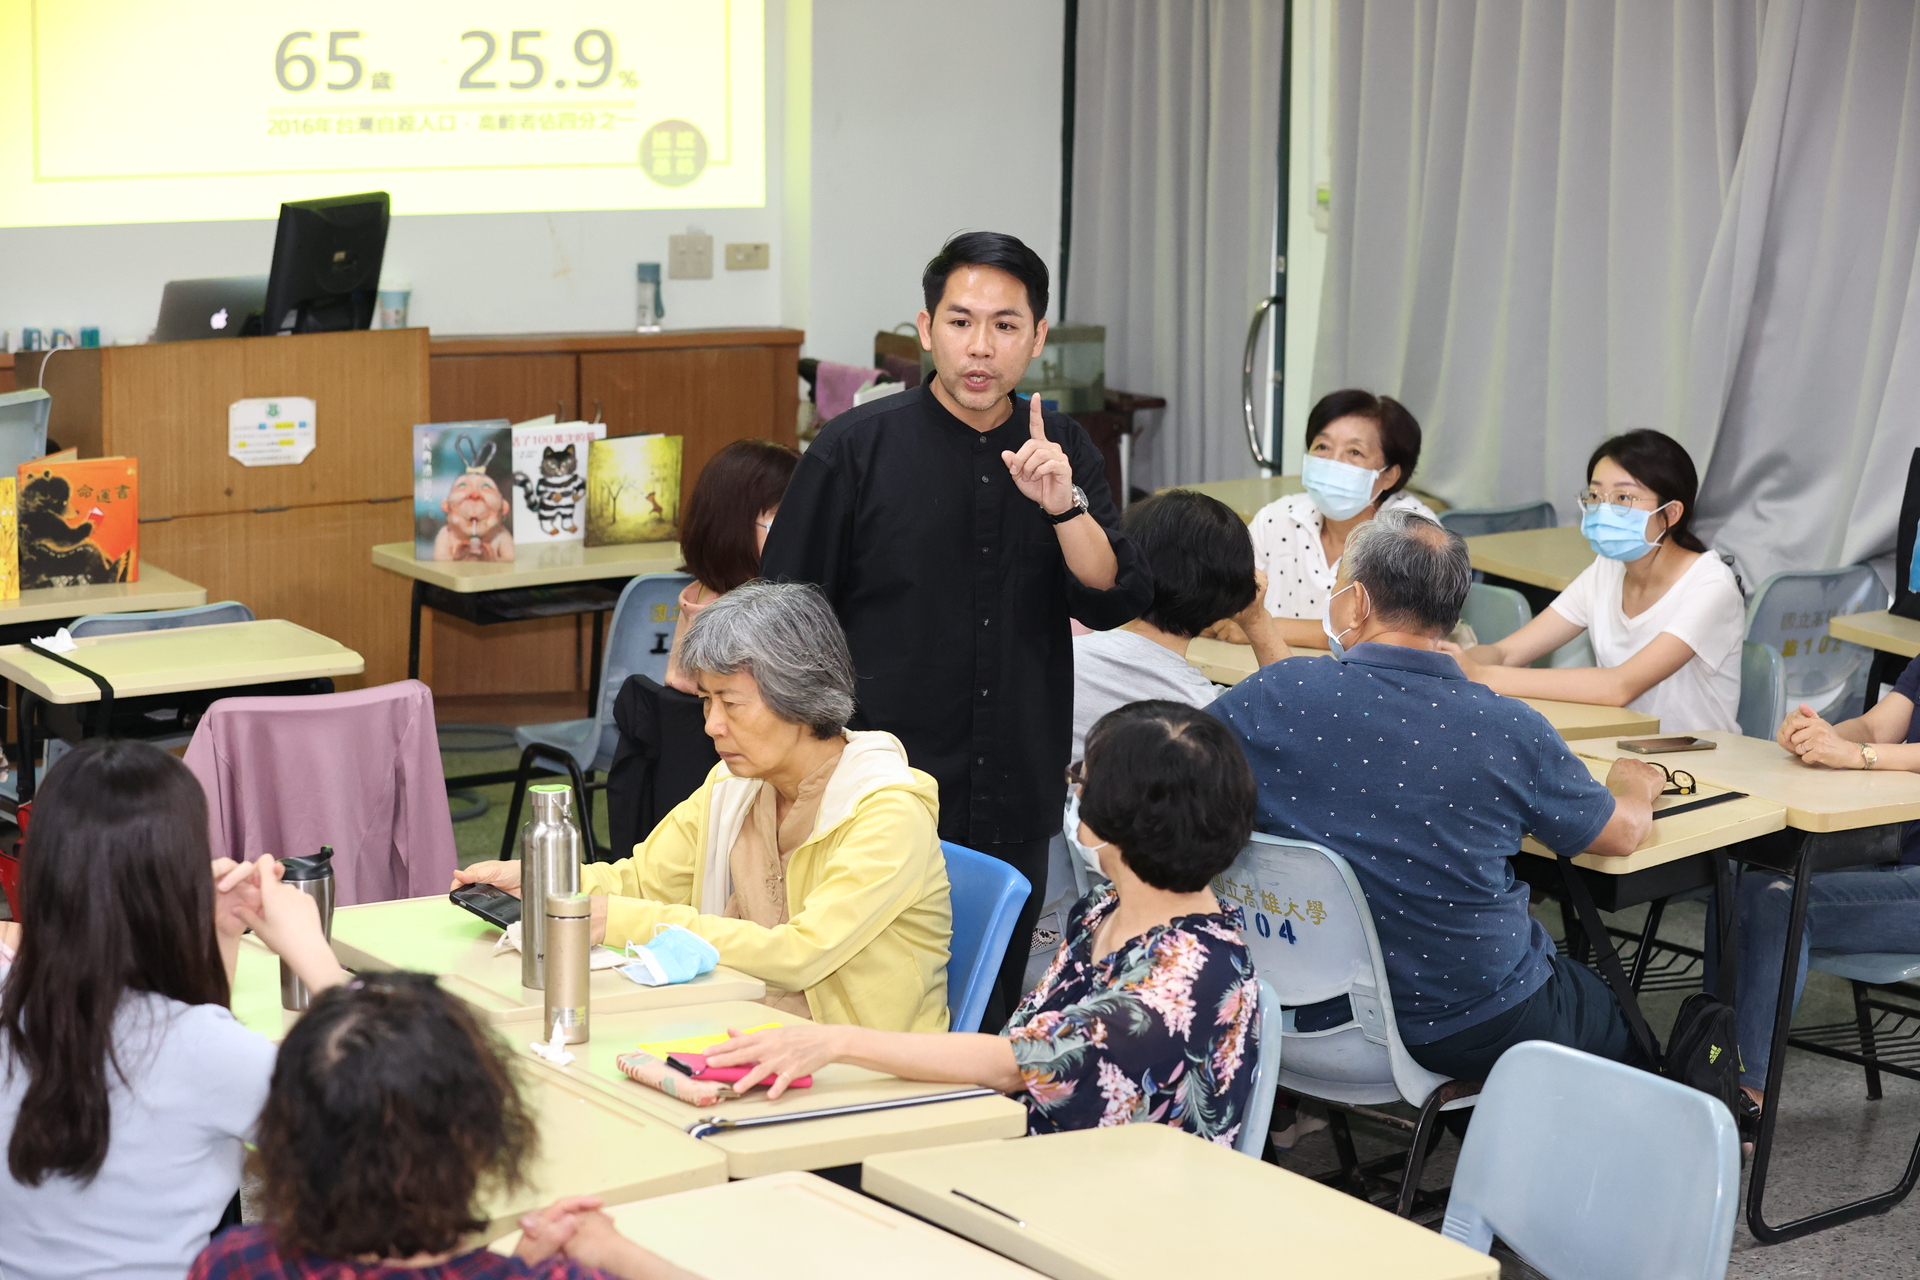 The Associate Professor, Kuei-Ju Tsai, held an activity to stimulate intergenerational dialogue02